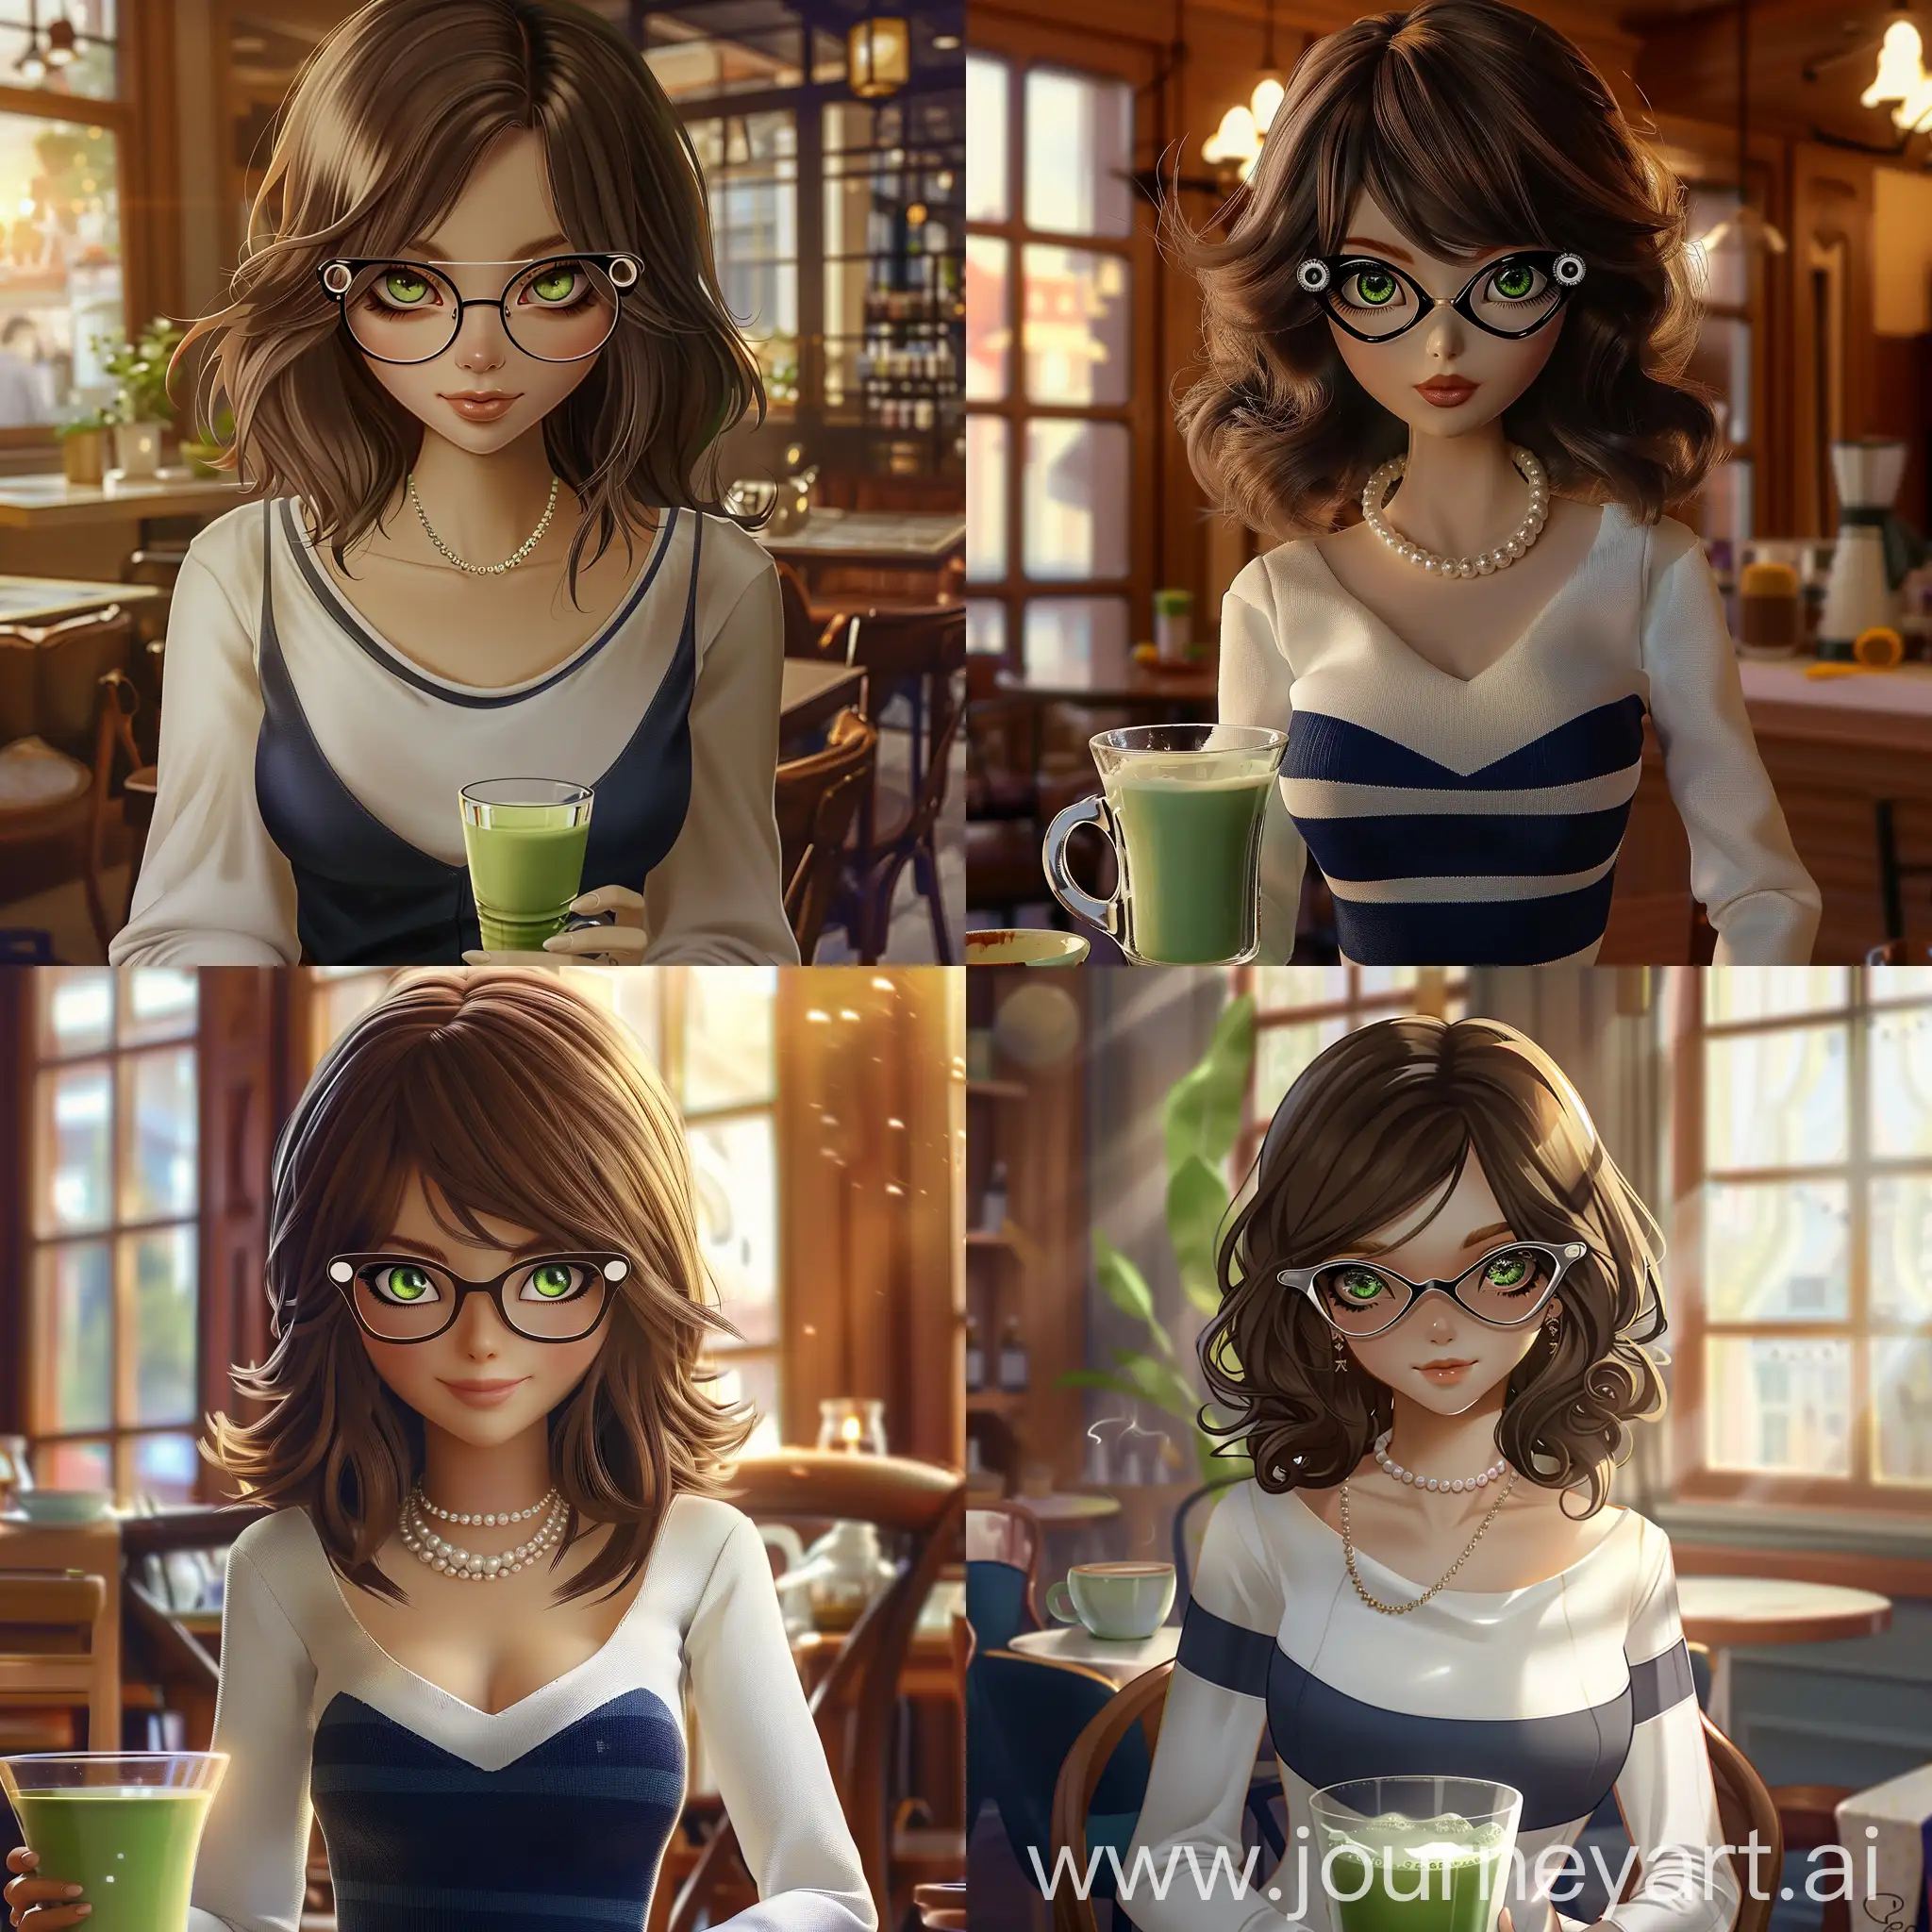 Stylish-Bratz-Doll-Inspired-Girl-Enjoying-Matcha-Latte-in-a-Cafe